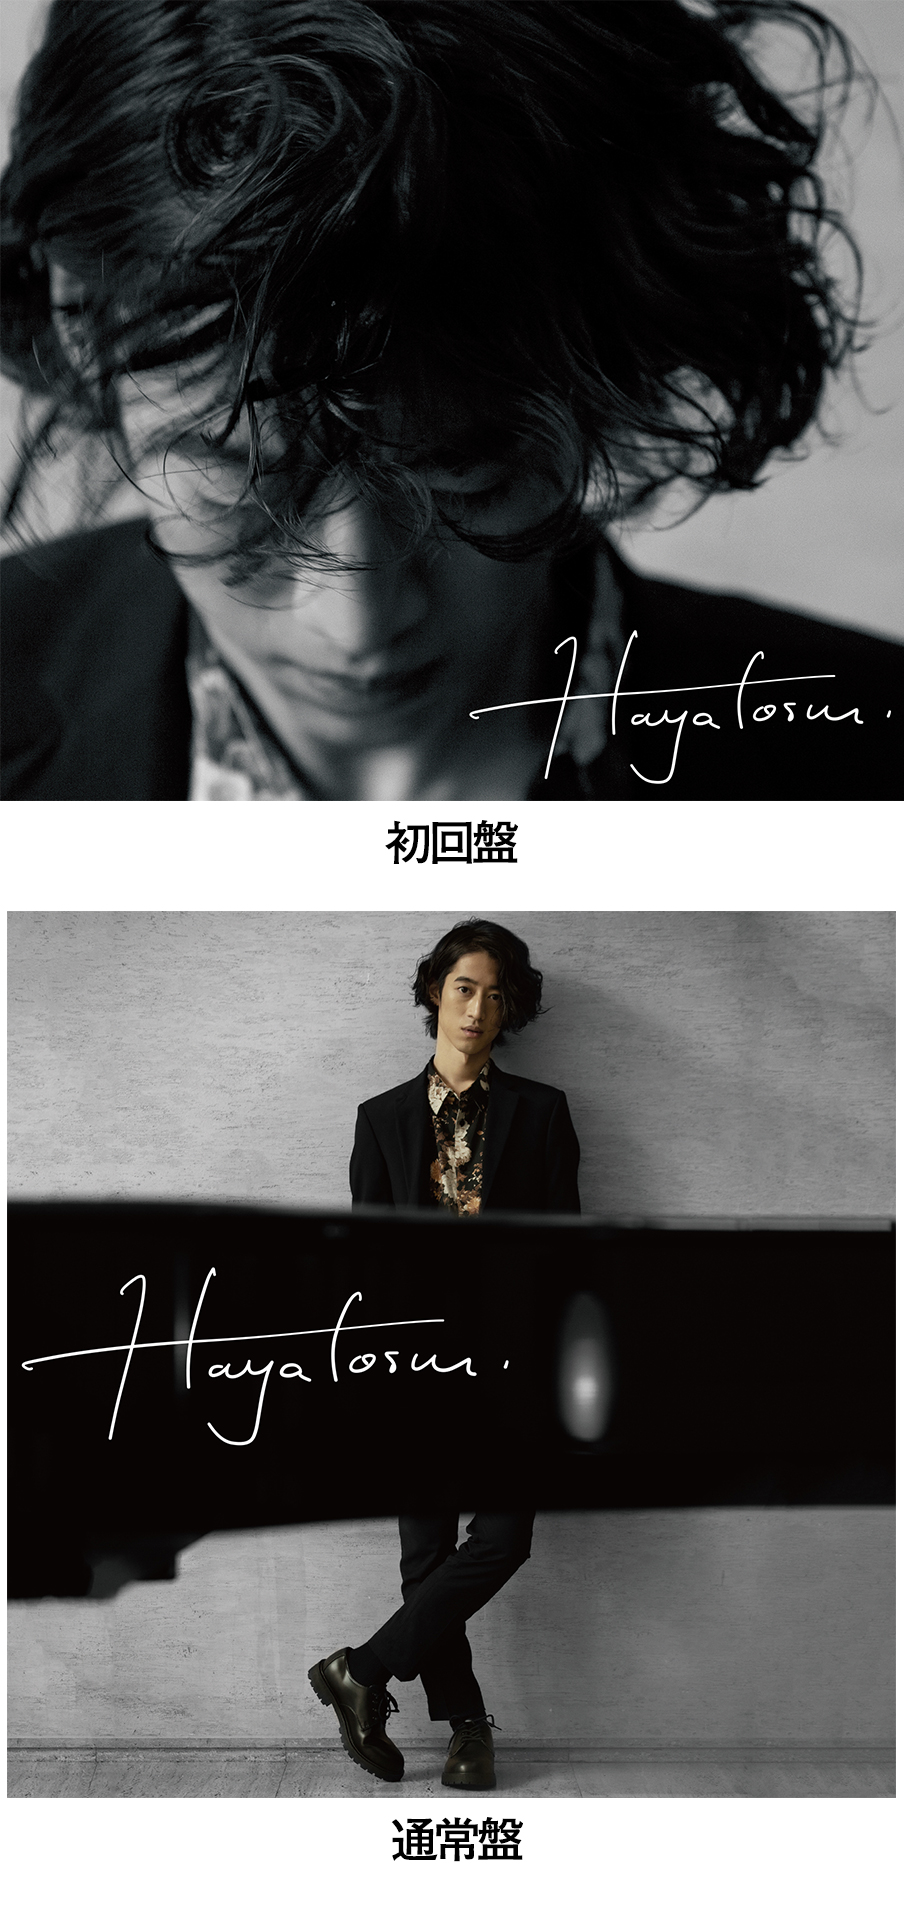 1st.フルアルバム「HAYATOSM」 | 角野隼斗 Hayato Sumino Official Website